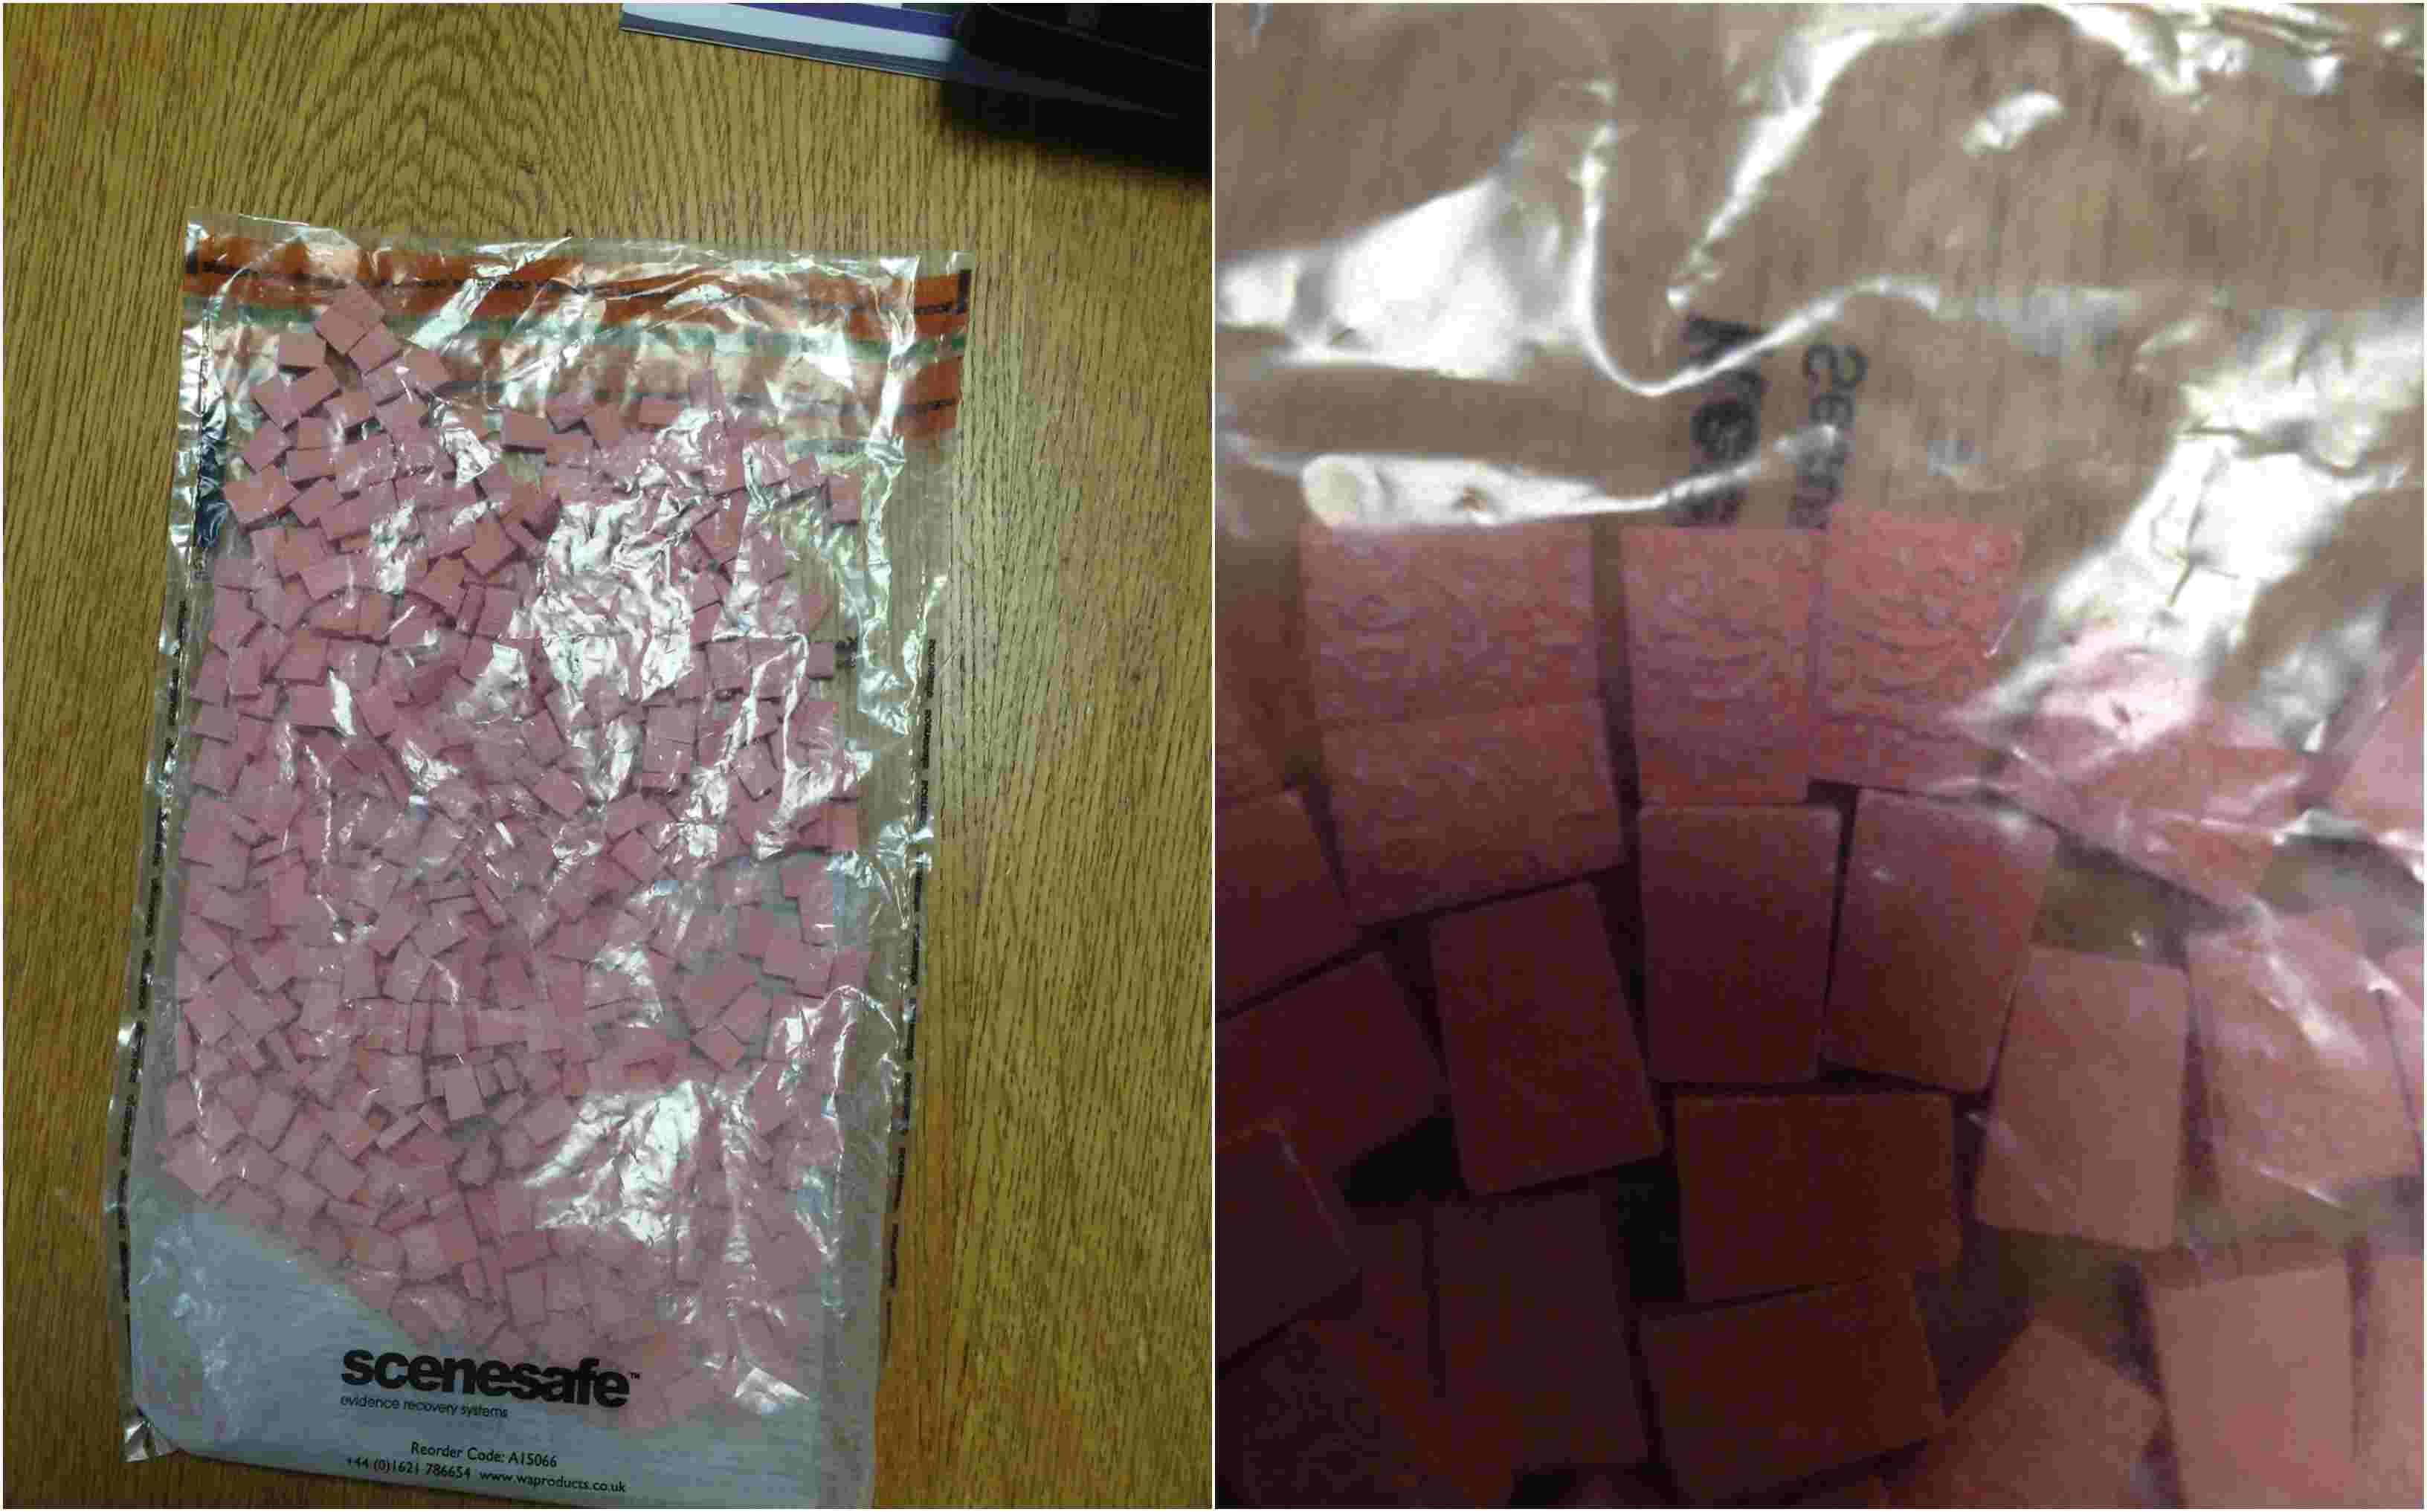 Newry drugs seized